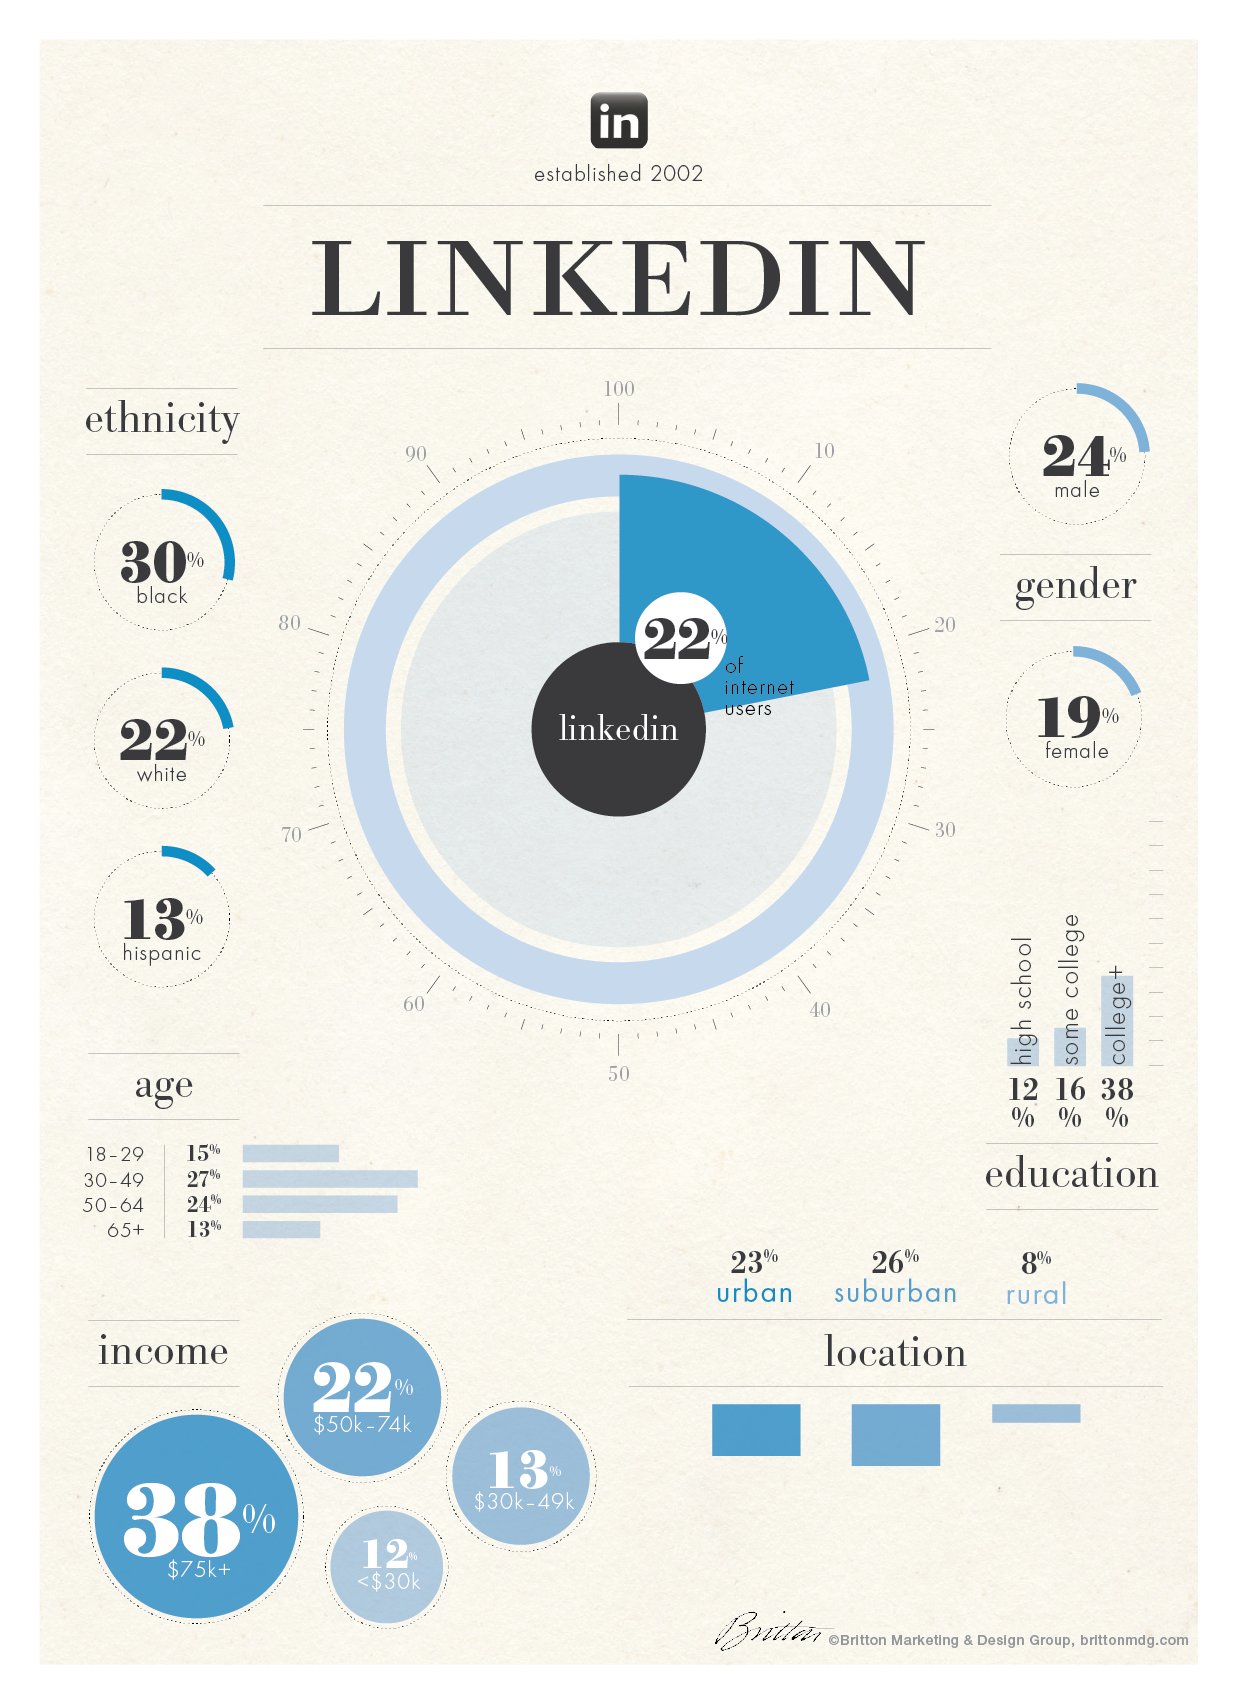 #Infographic: The demographics of #LinkedIn users - #socialmedia